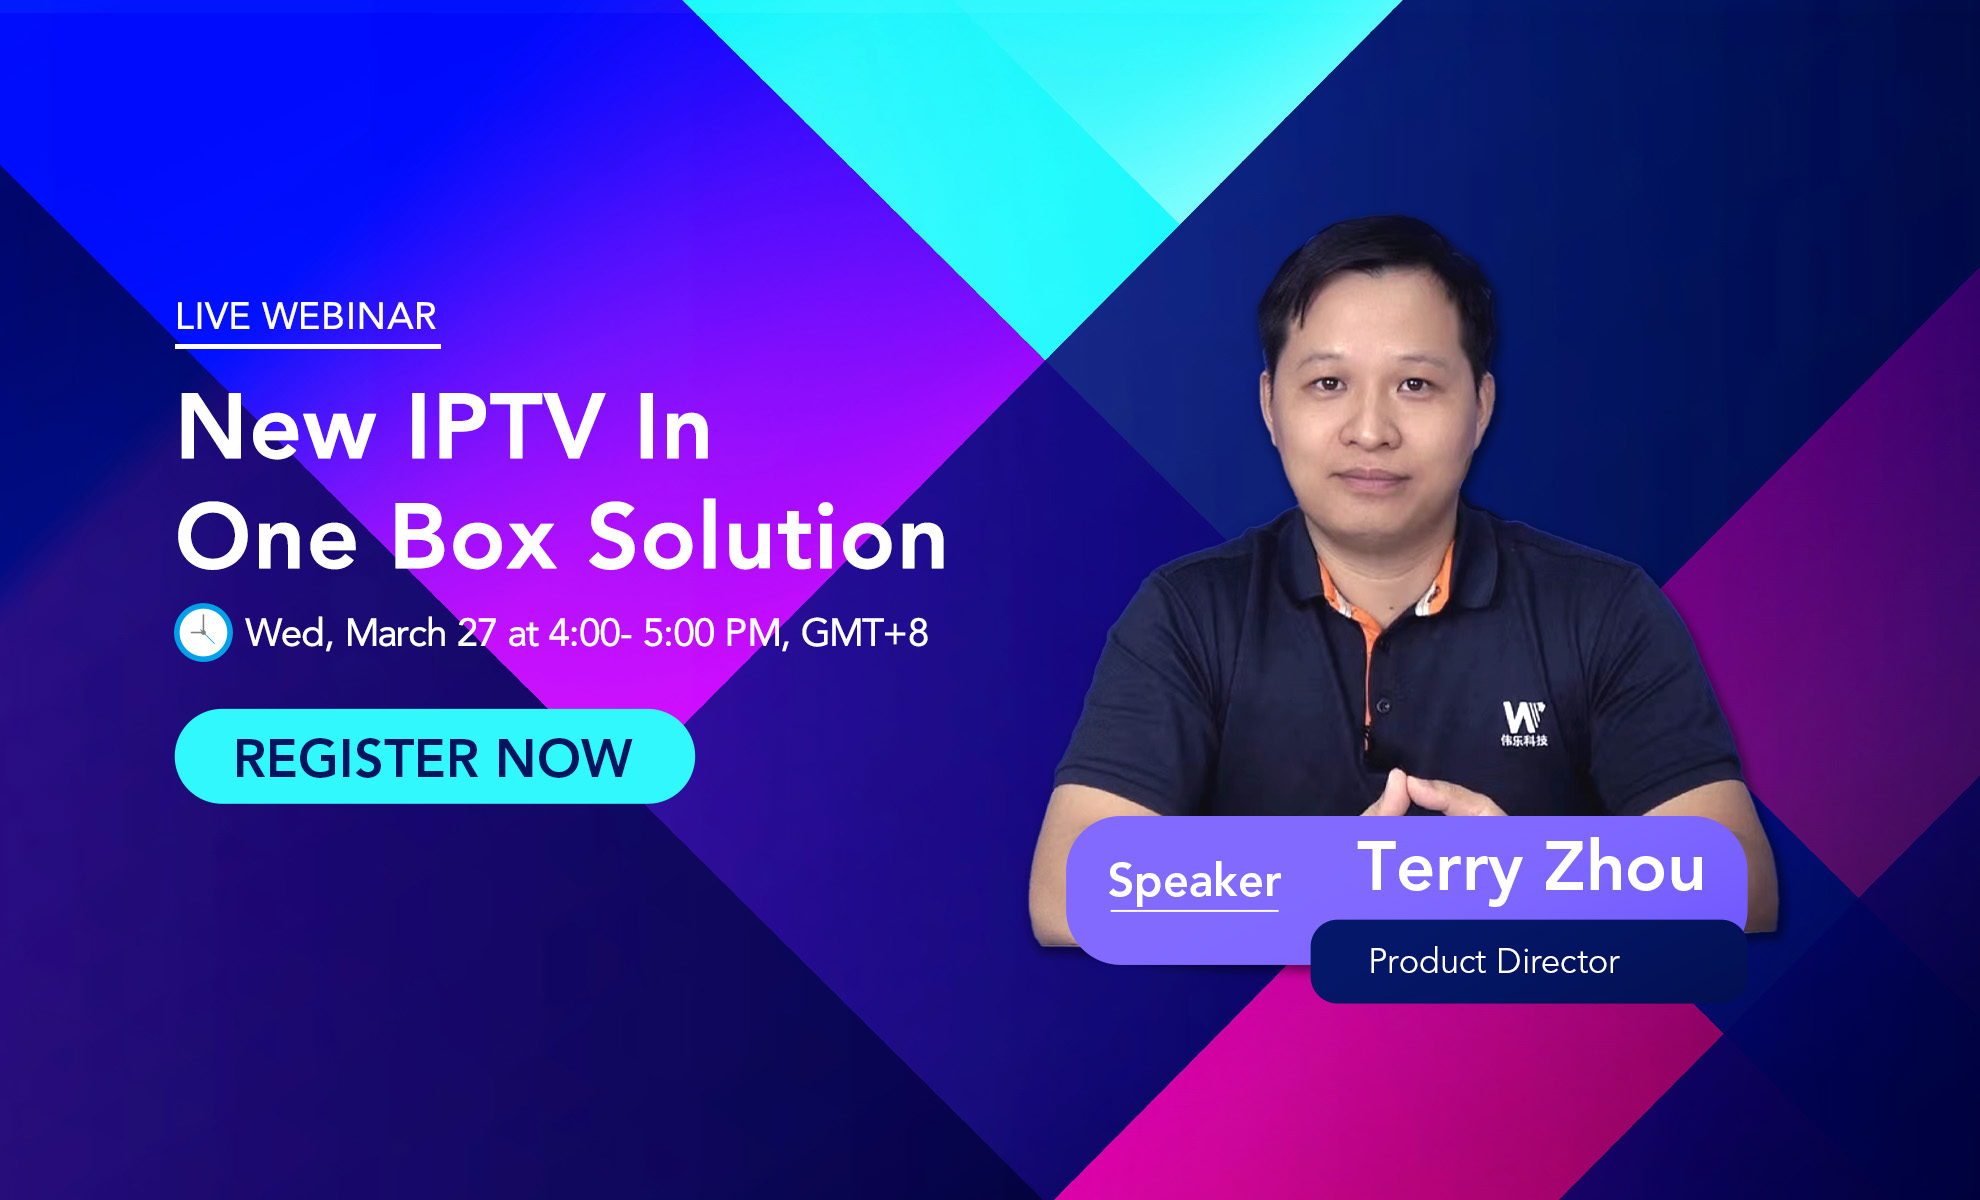 Live Webinar - New IPTV In One Box Solution